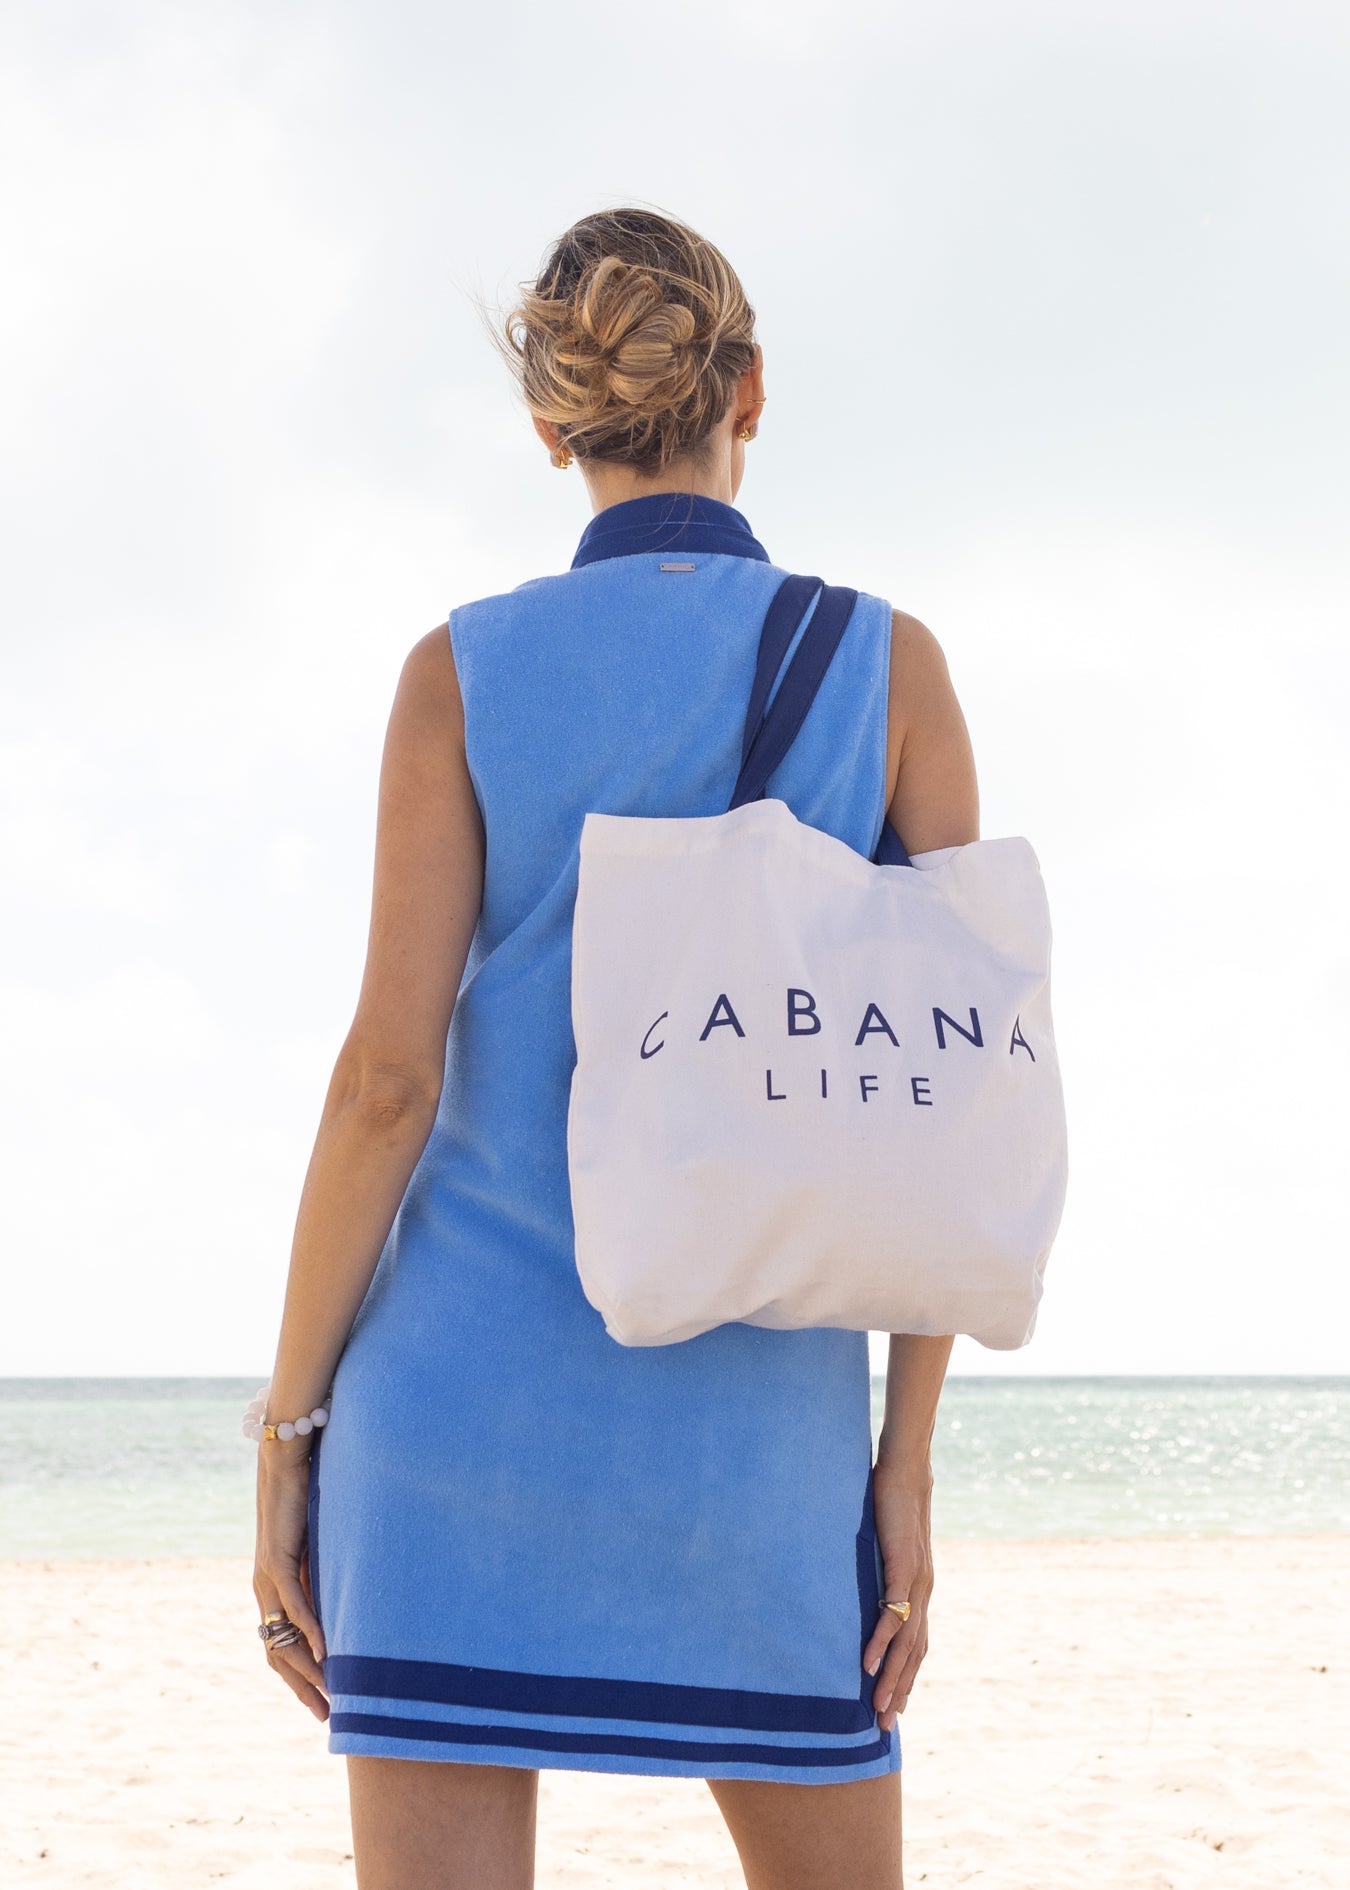 Woman wearing Blue/Navy Trim Sleeveless Terry Tunic holding Cabana Life Tote Bag on beach